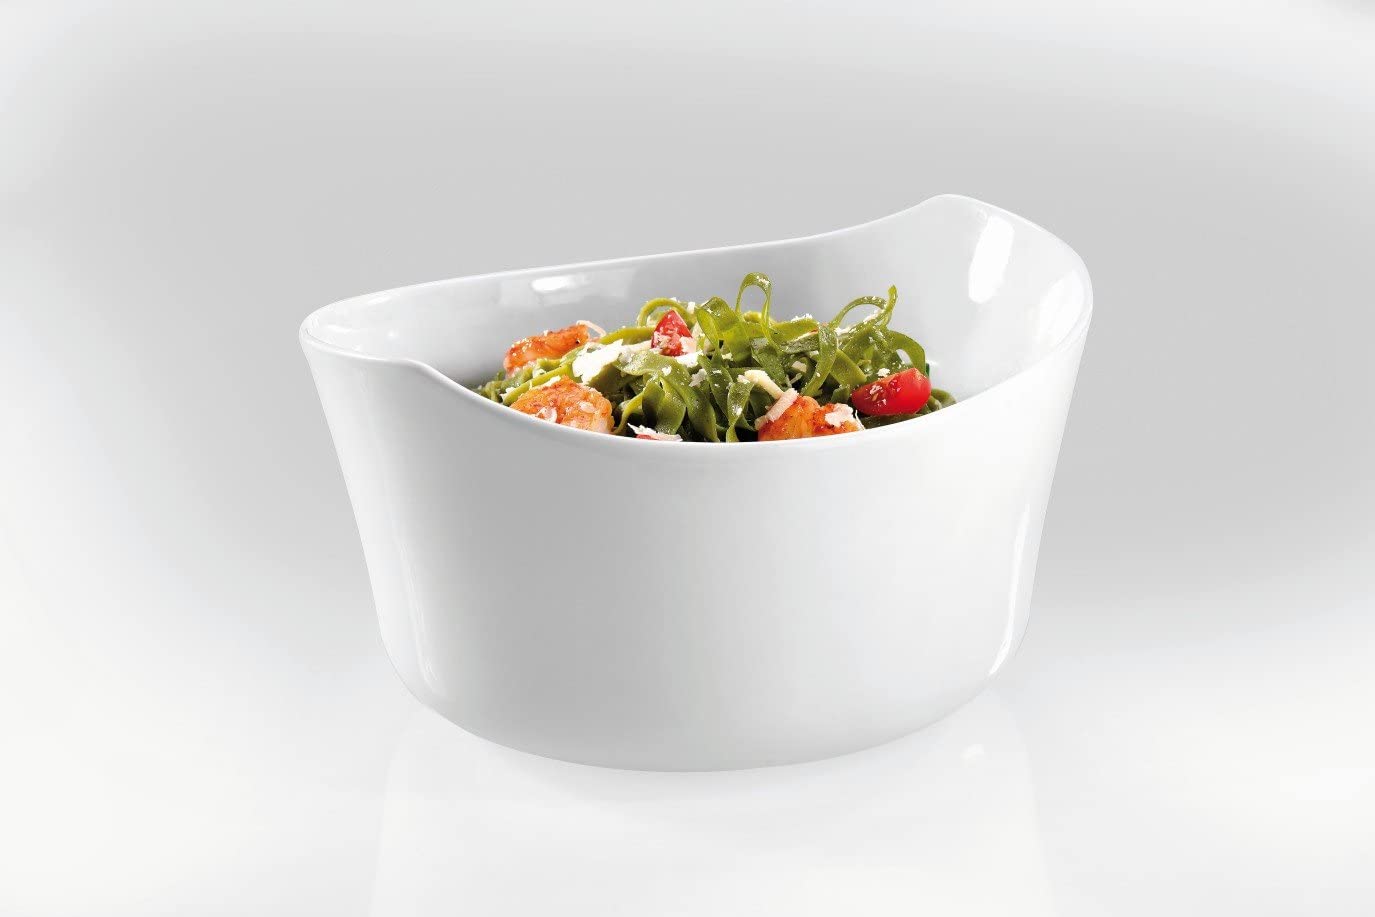 Gefu Salad Bowl Insipria, Accessories for Pasta and Fruit, Porcelain, 25cm, 35010